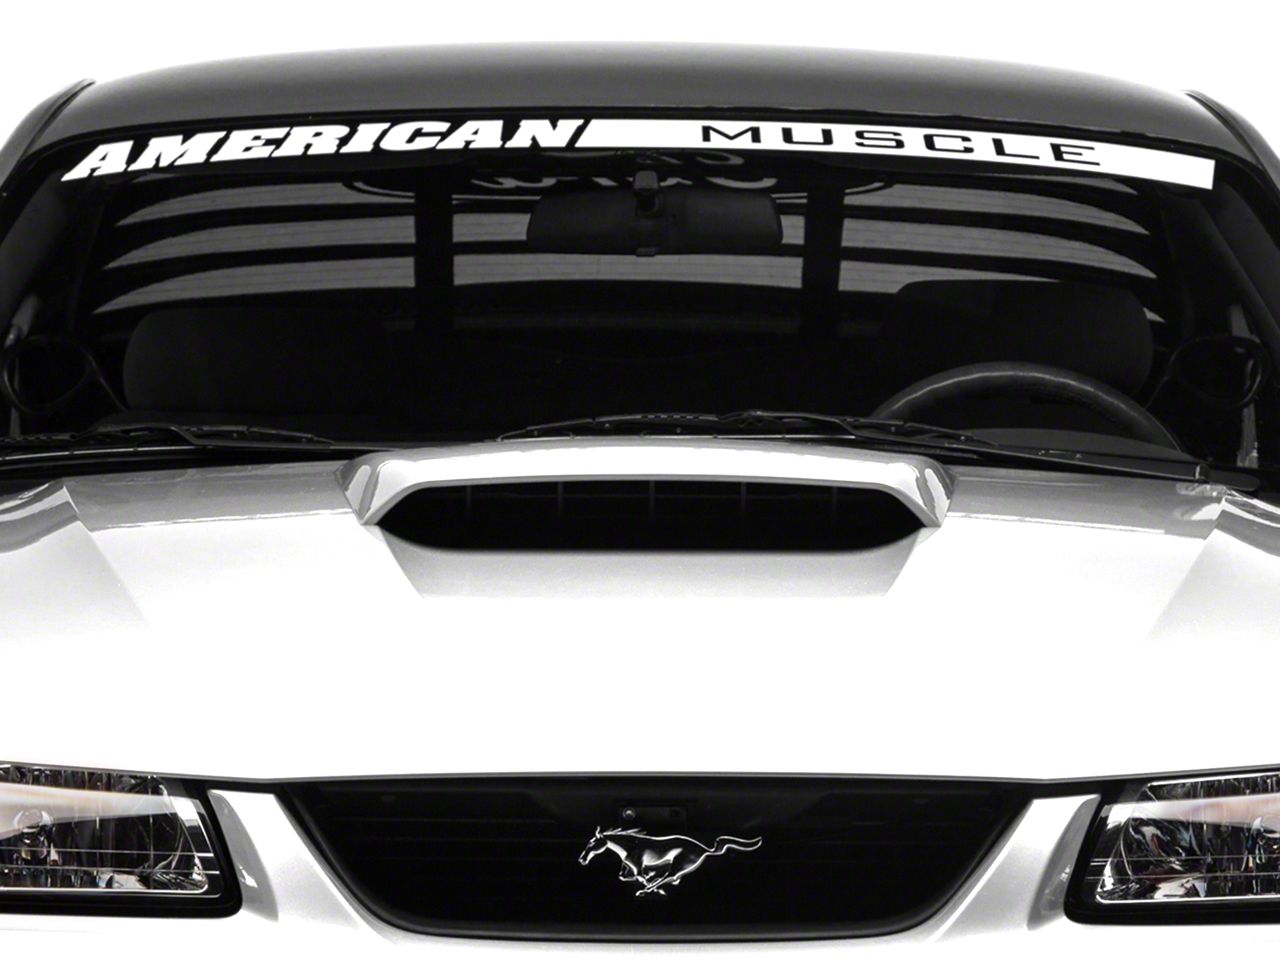 1999-2004 Mustang Emblems & Badges | AmericanMuscle